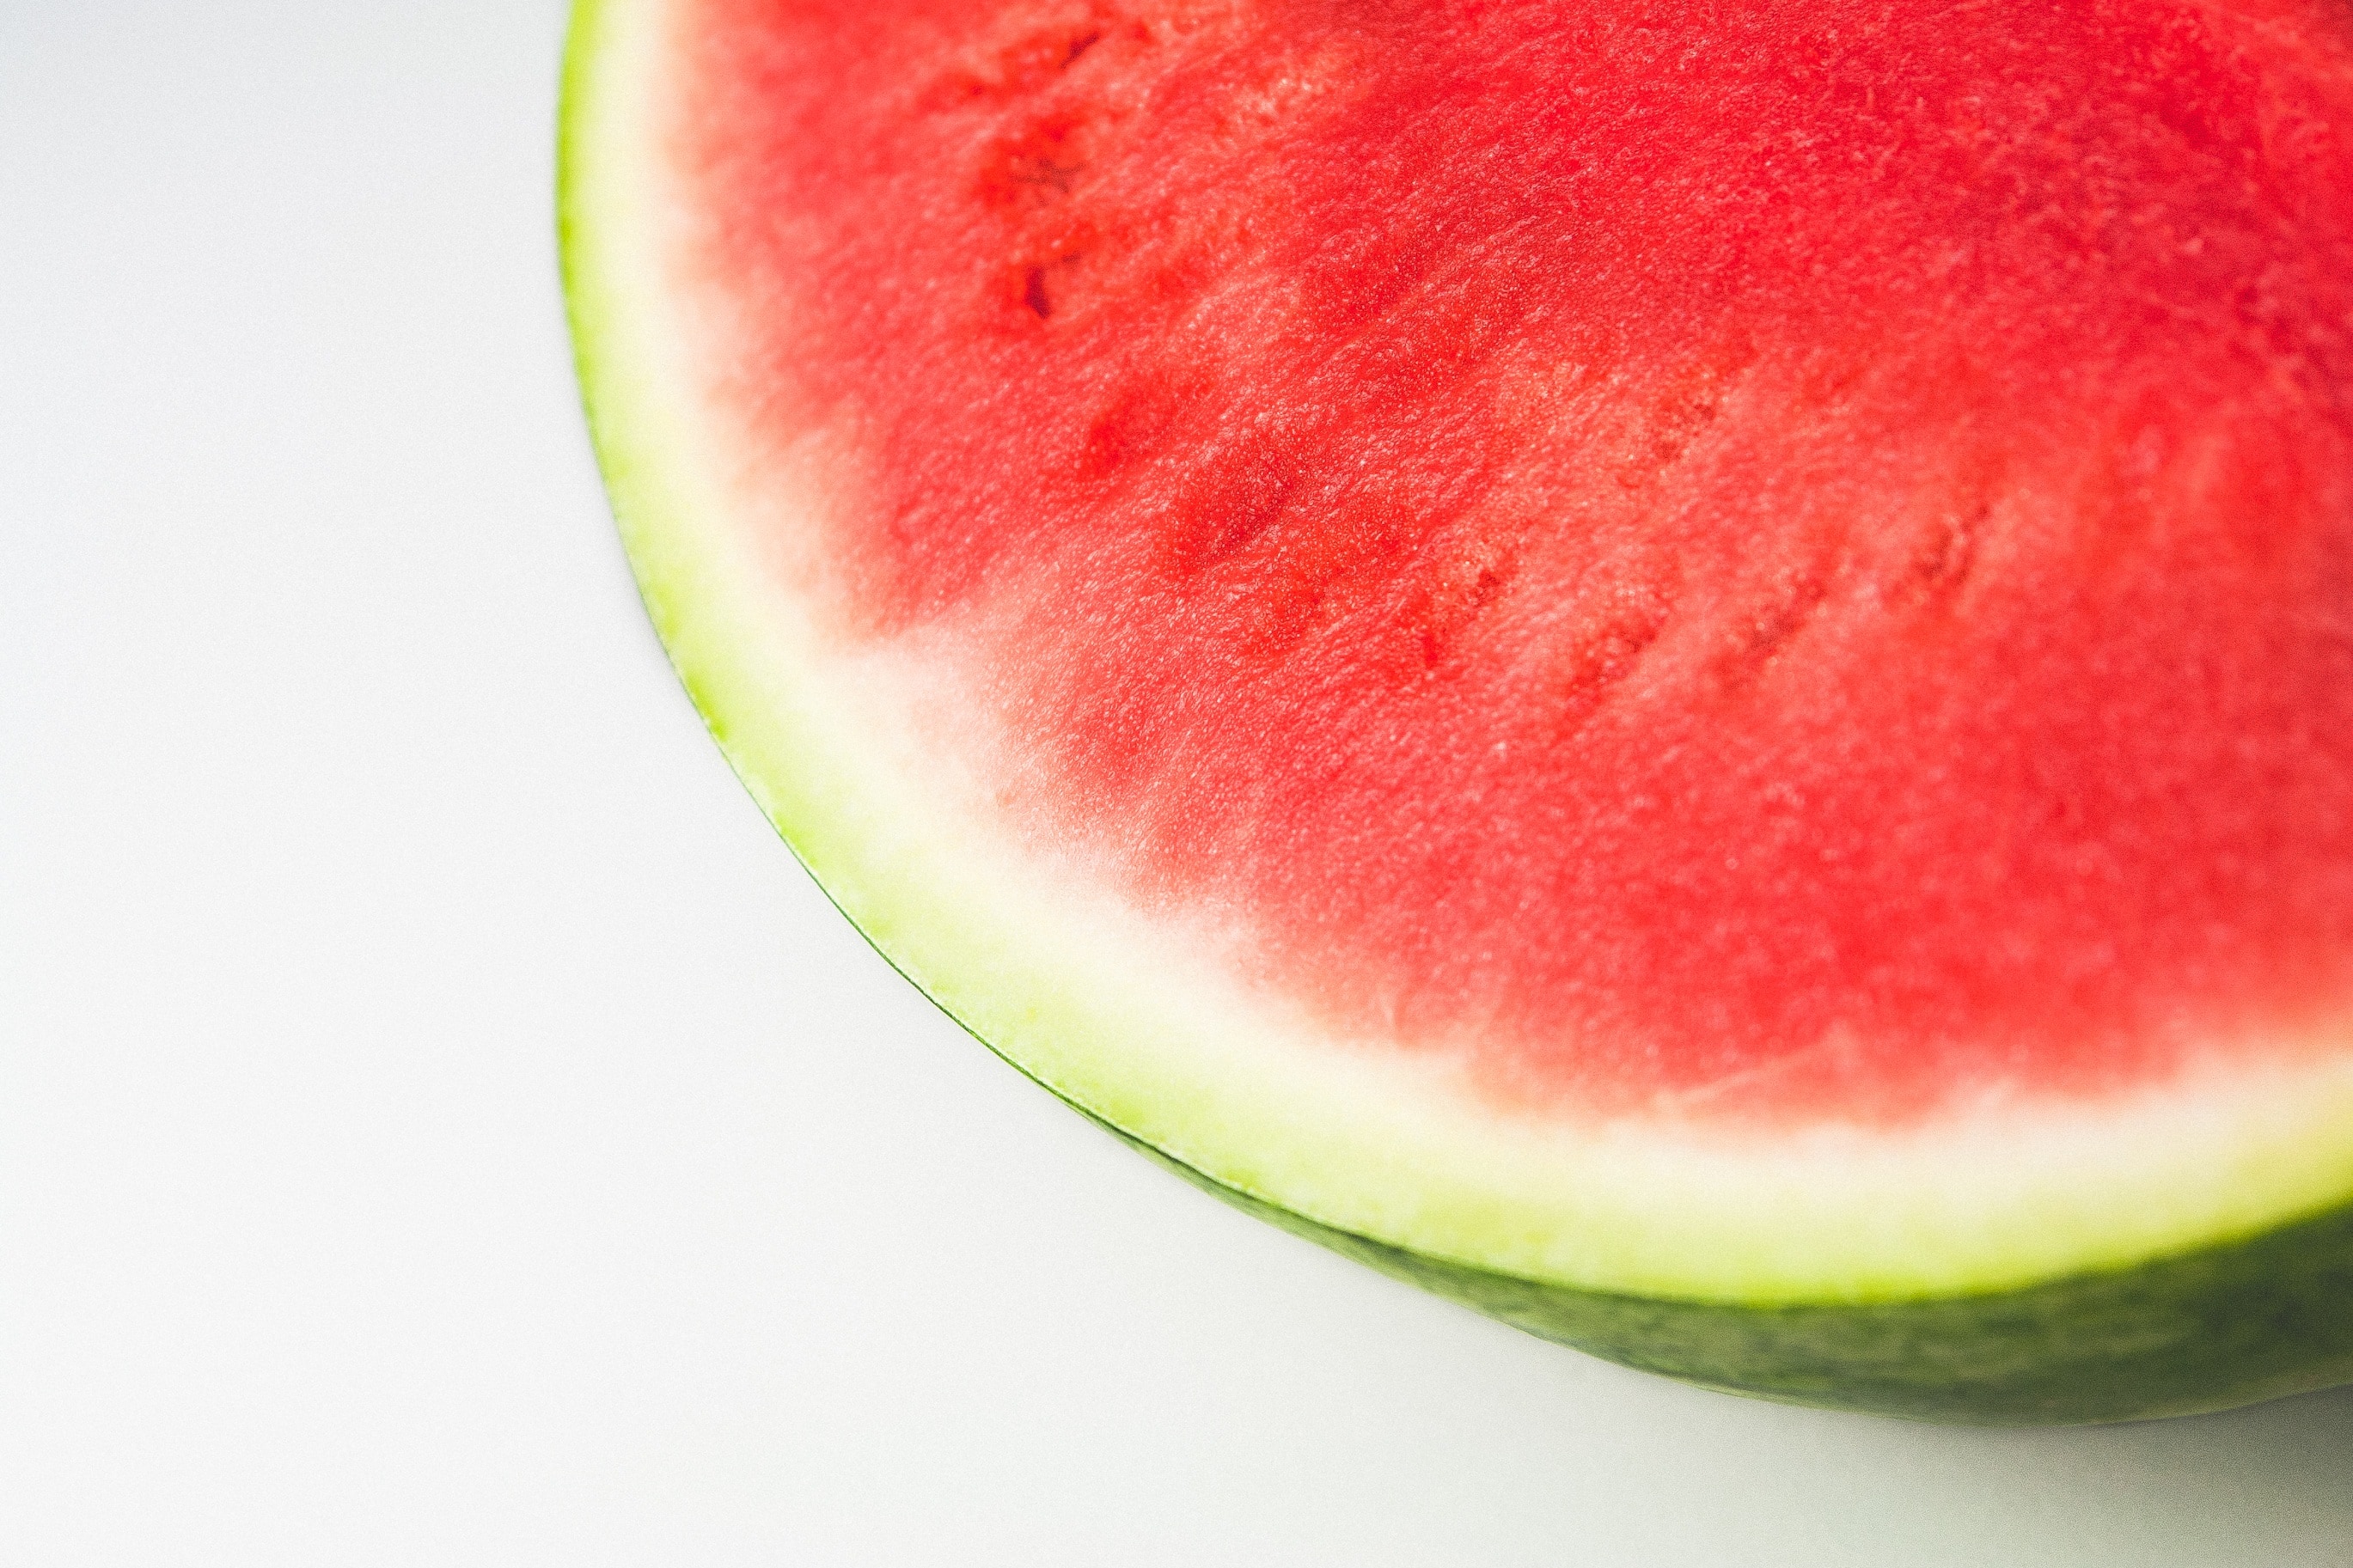 sliced watermelon in closeup shot